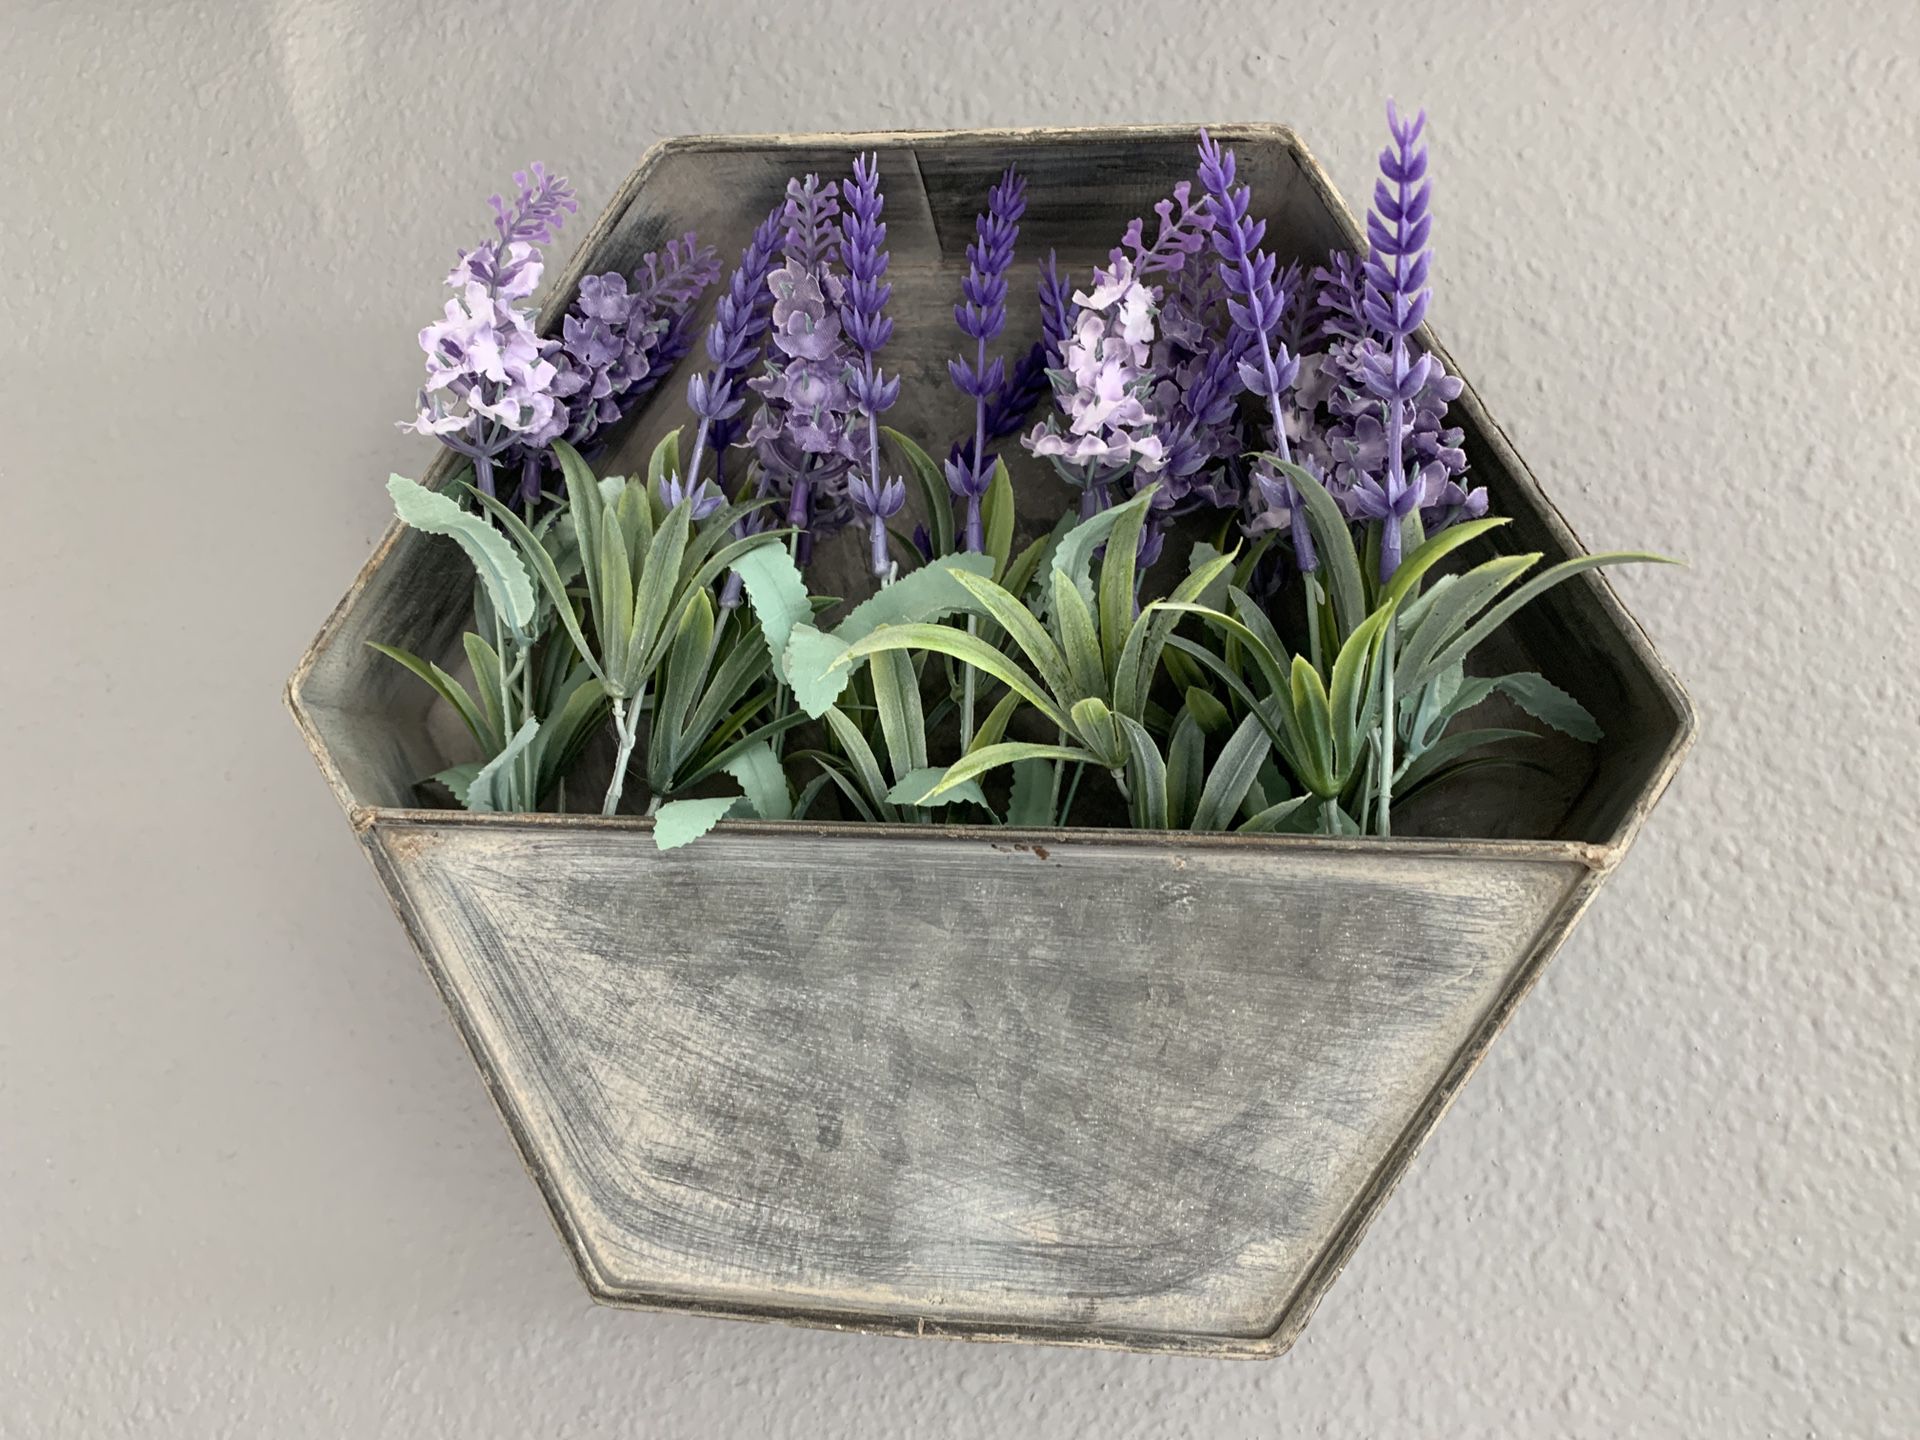 Metal Vase holding “lavender flowers” - wall decor